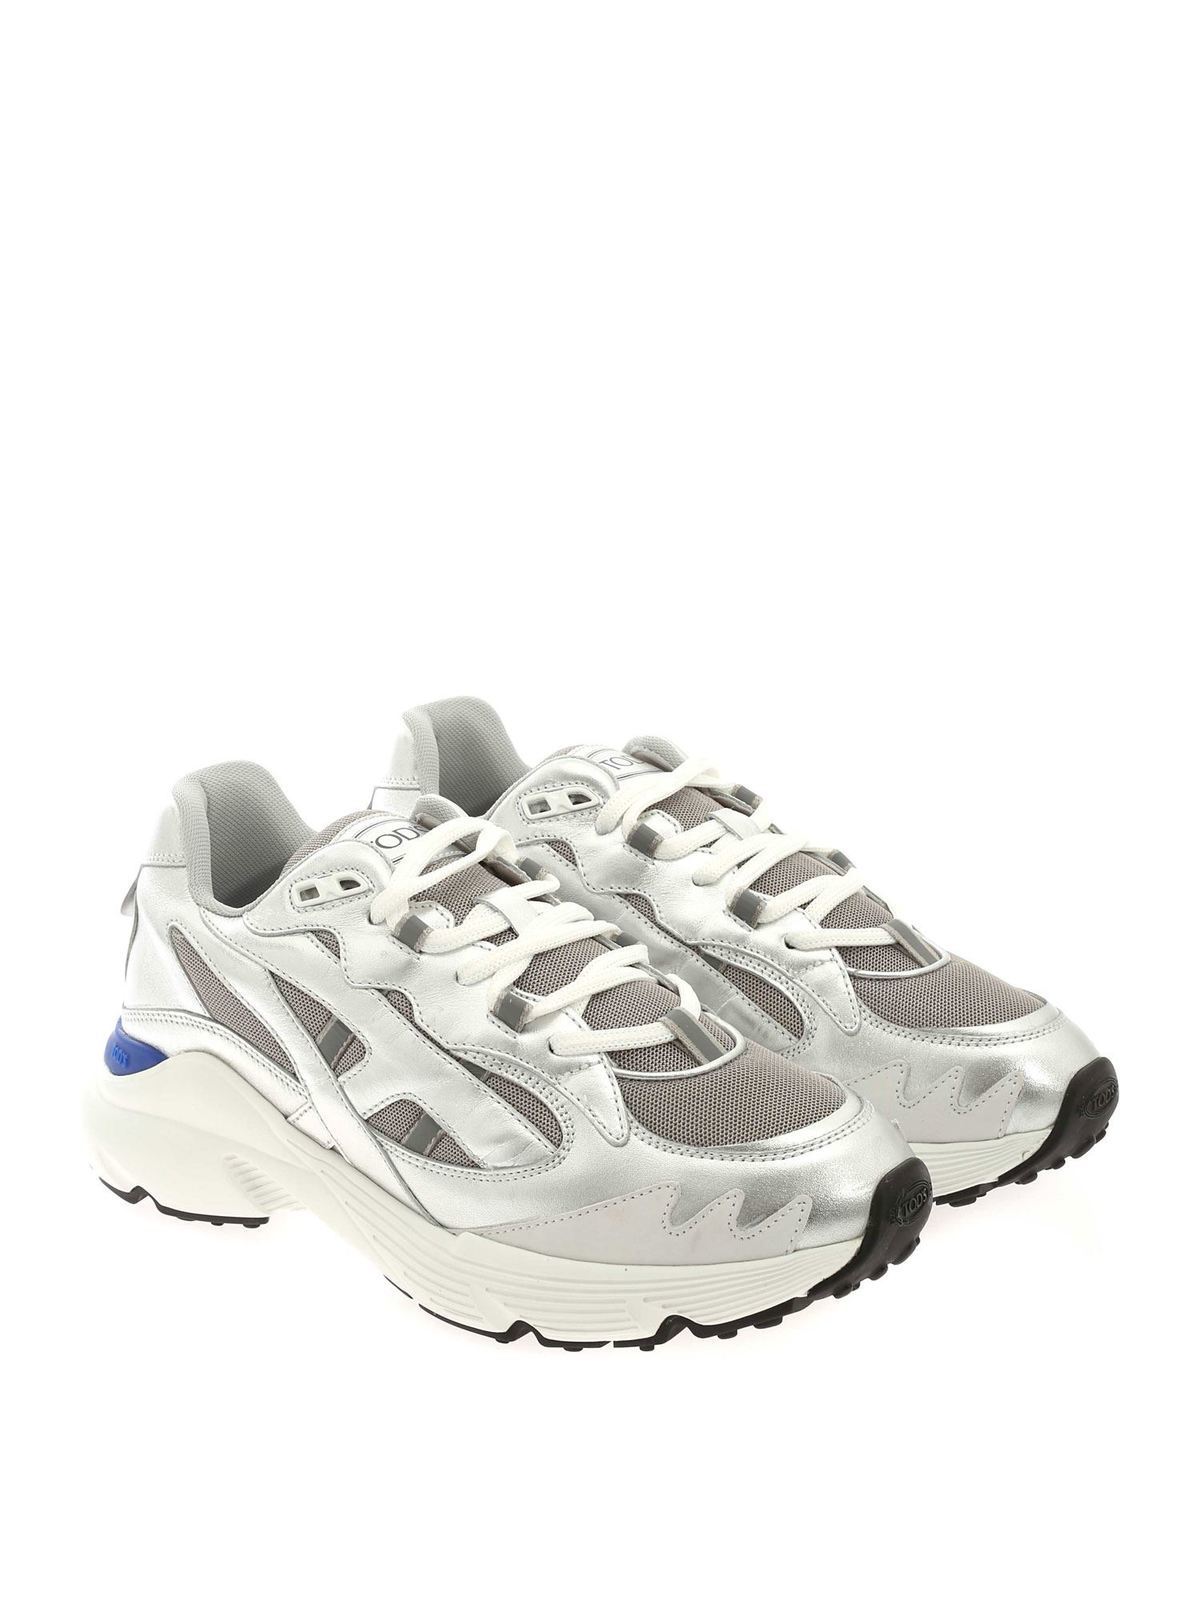 Run 54C sneakers in silver color 